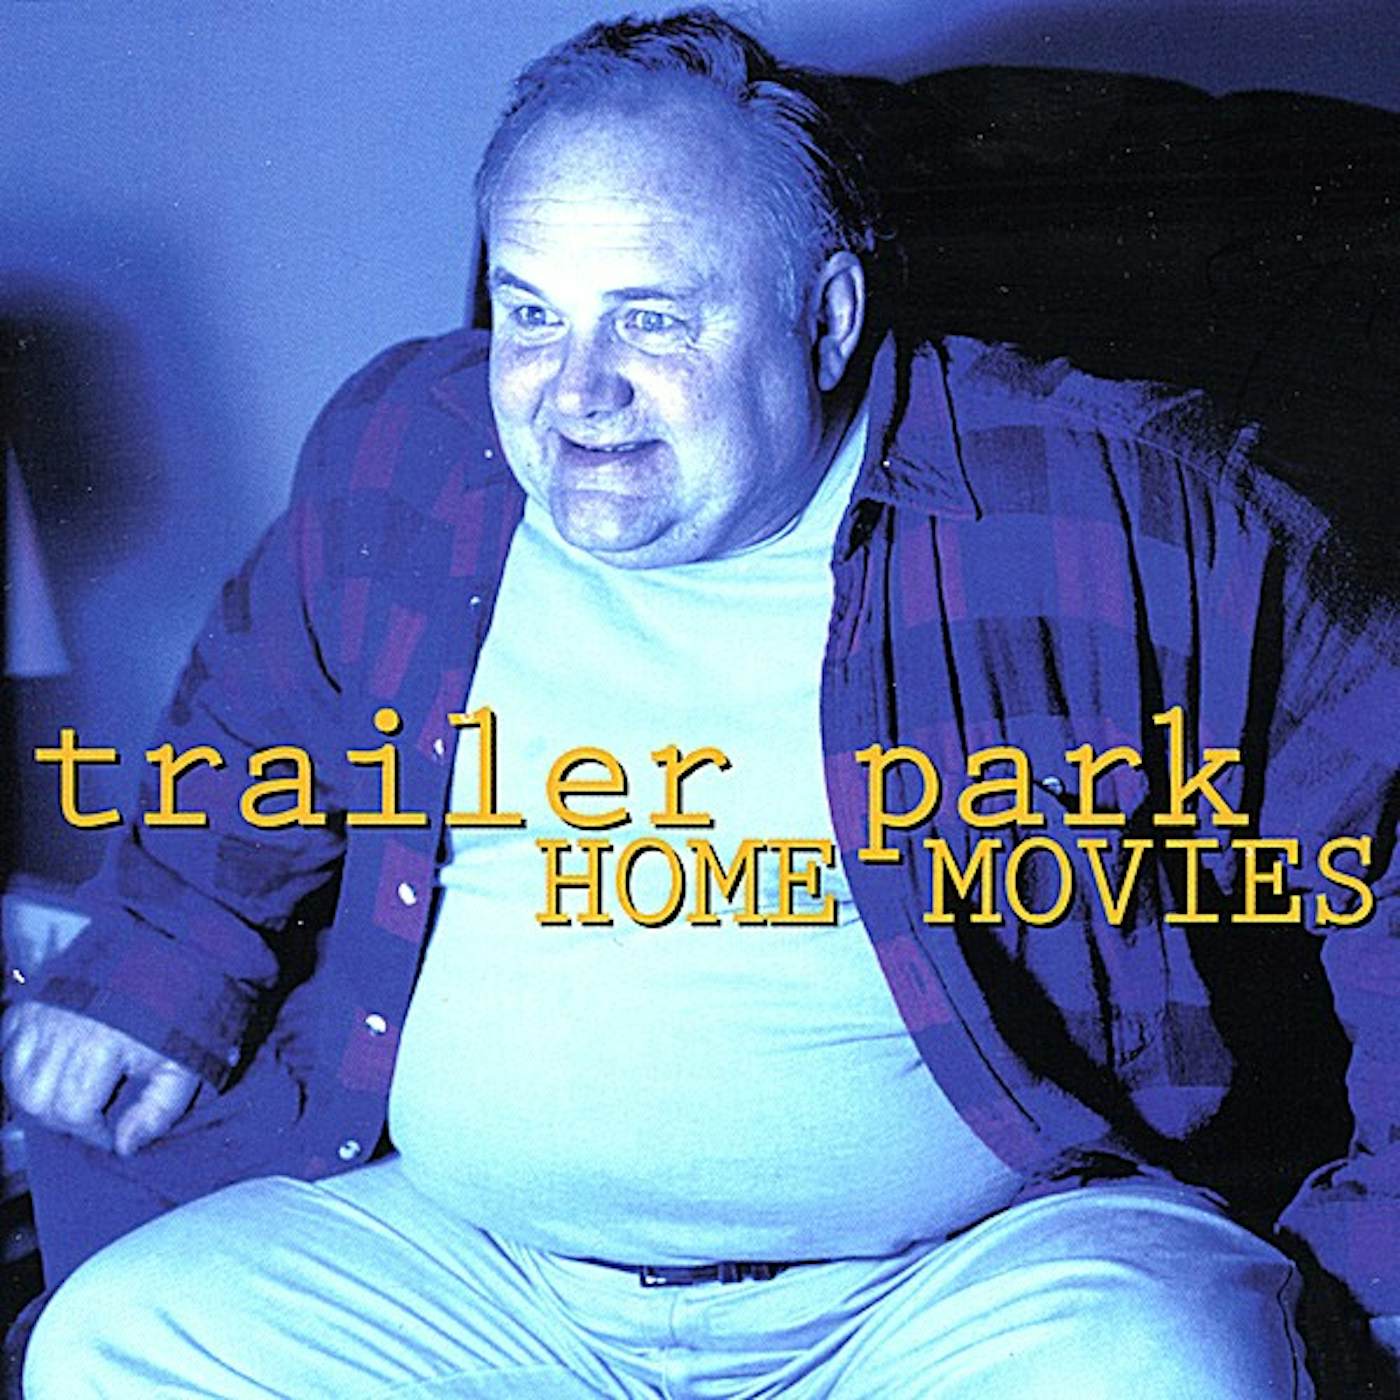 Trailer Park HOME MOVIES CD